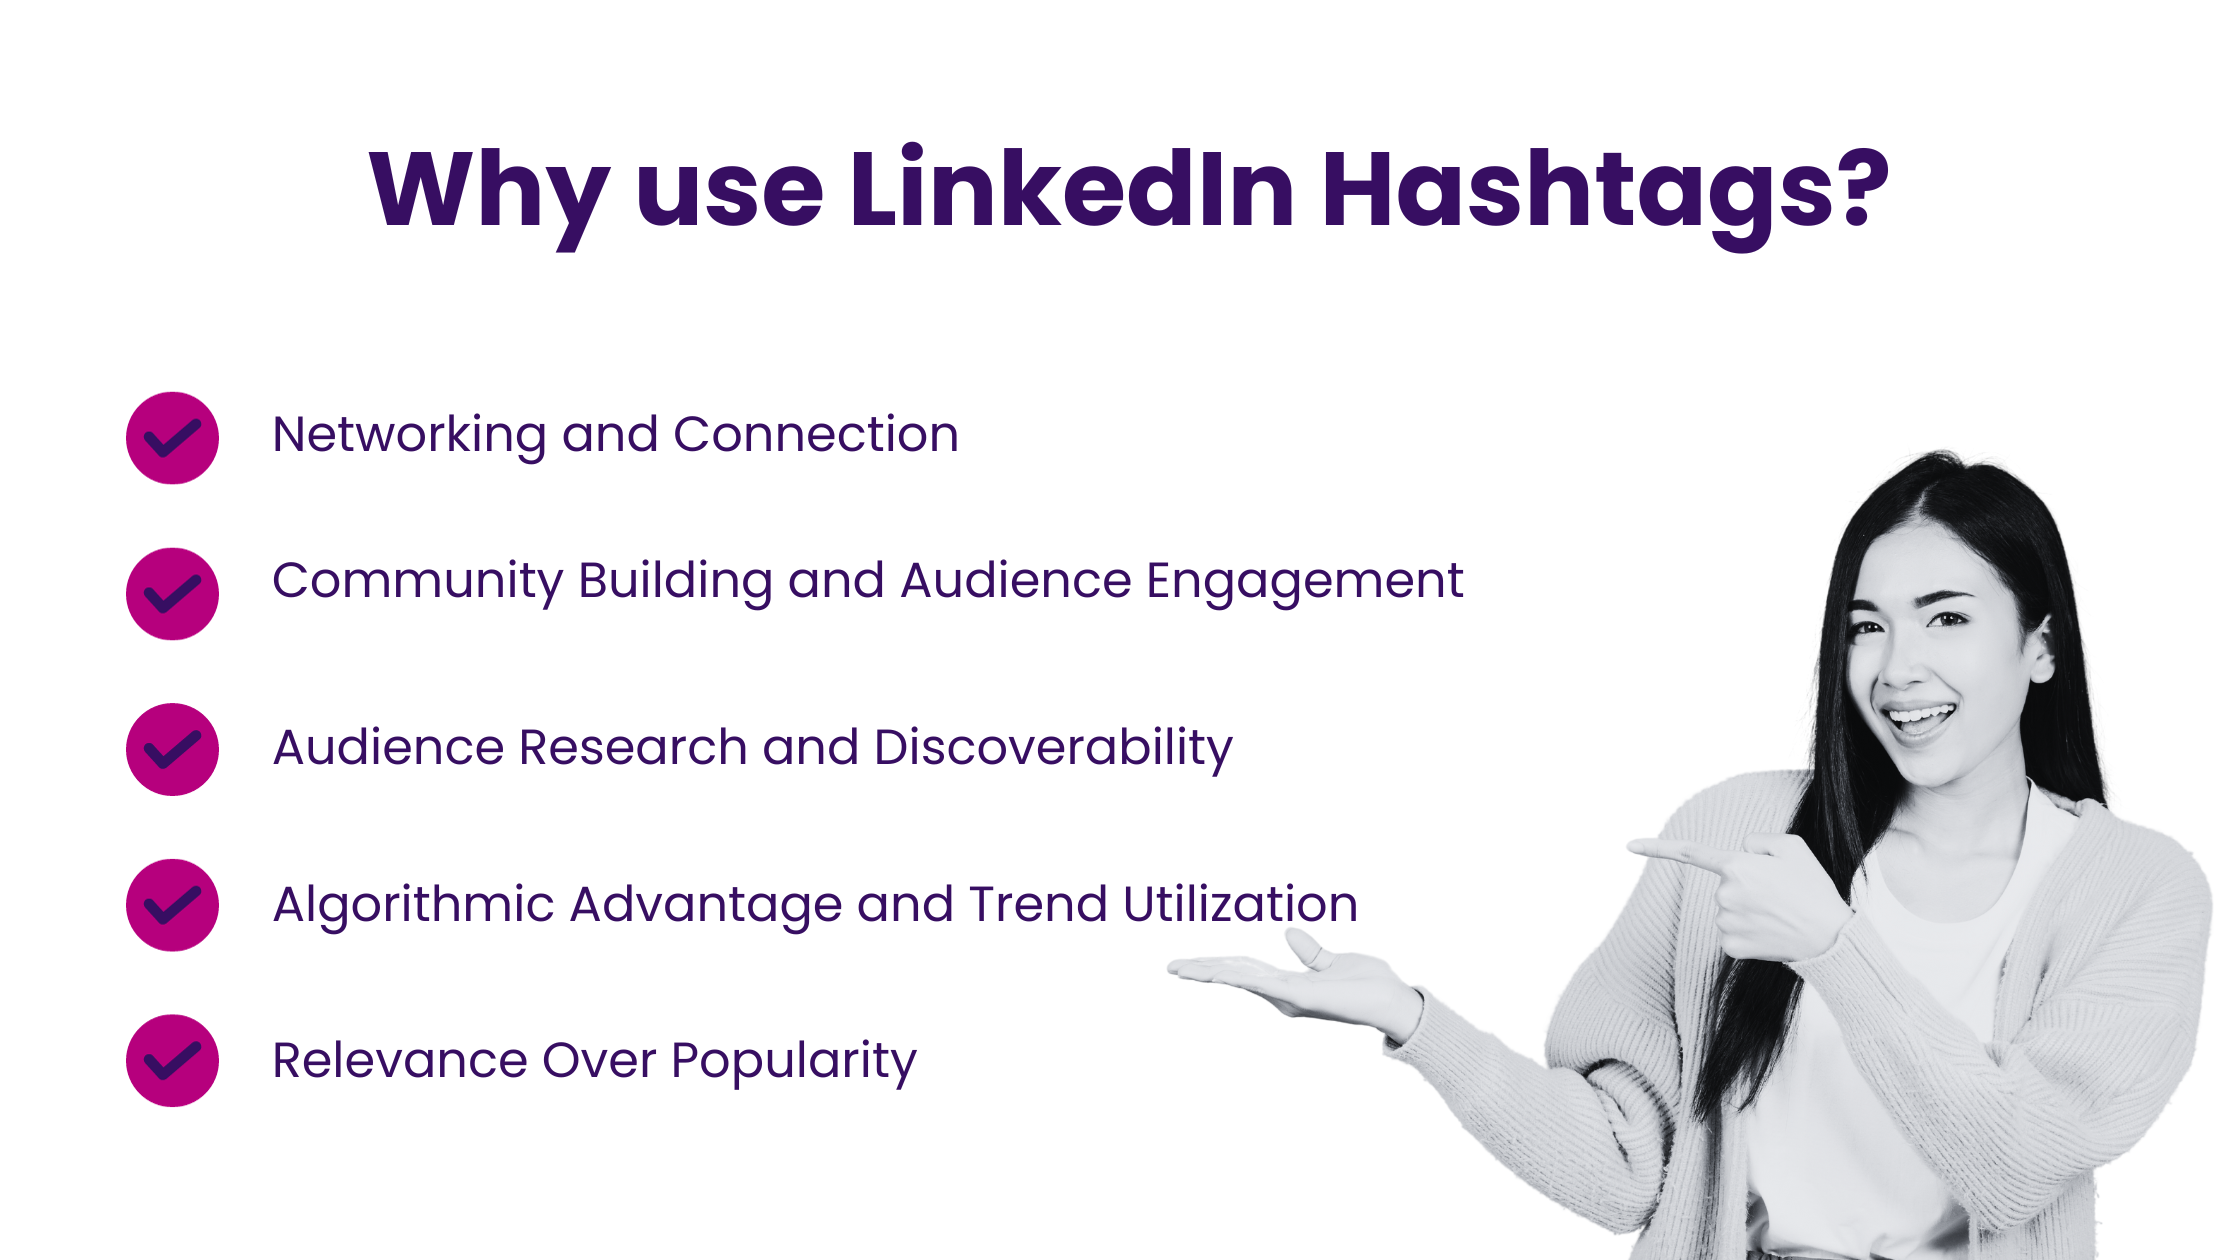 Why use LinkedIn Hashtags